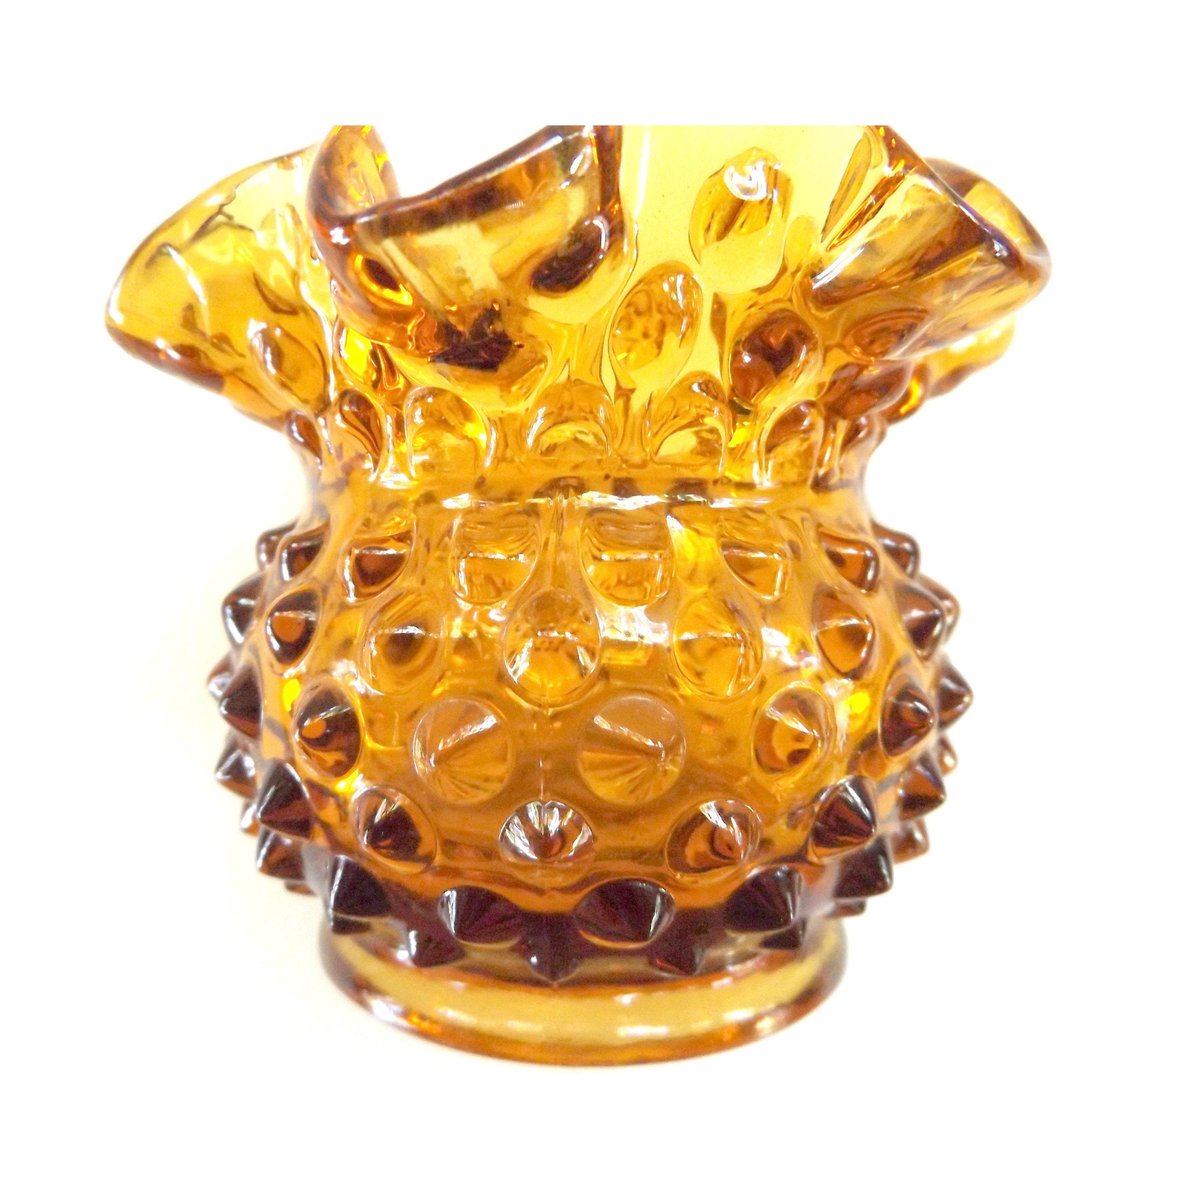 Amber Glass Hobnail Crimped Rose Bowl Vase 1940s Fenton, Free Shipping tuppu.net/171283a #JunkYardBlonde #Etsy #VintageGlass